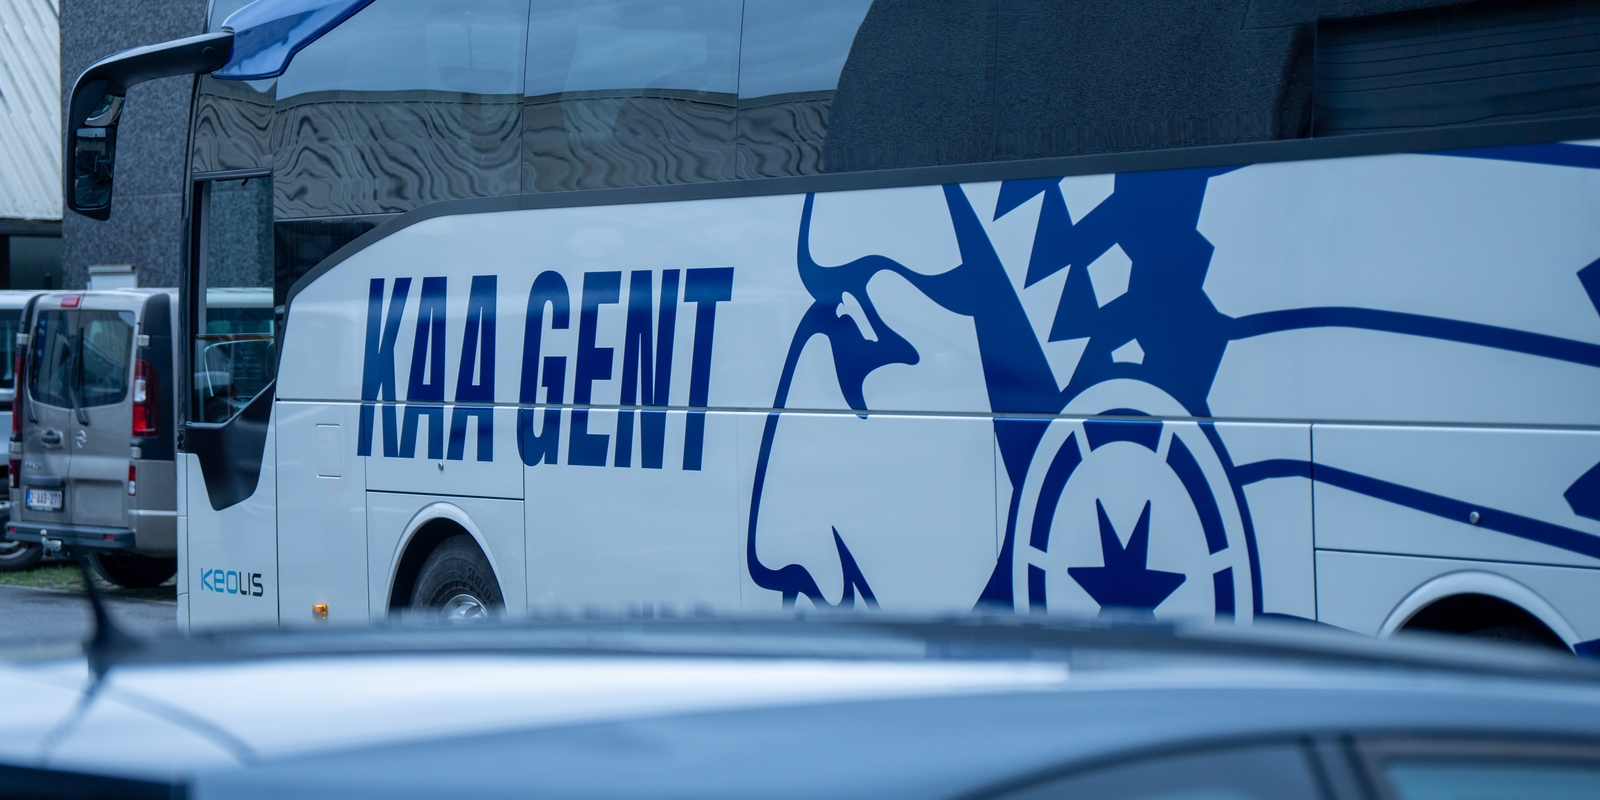 KAA Gent Bus